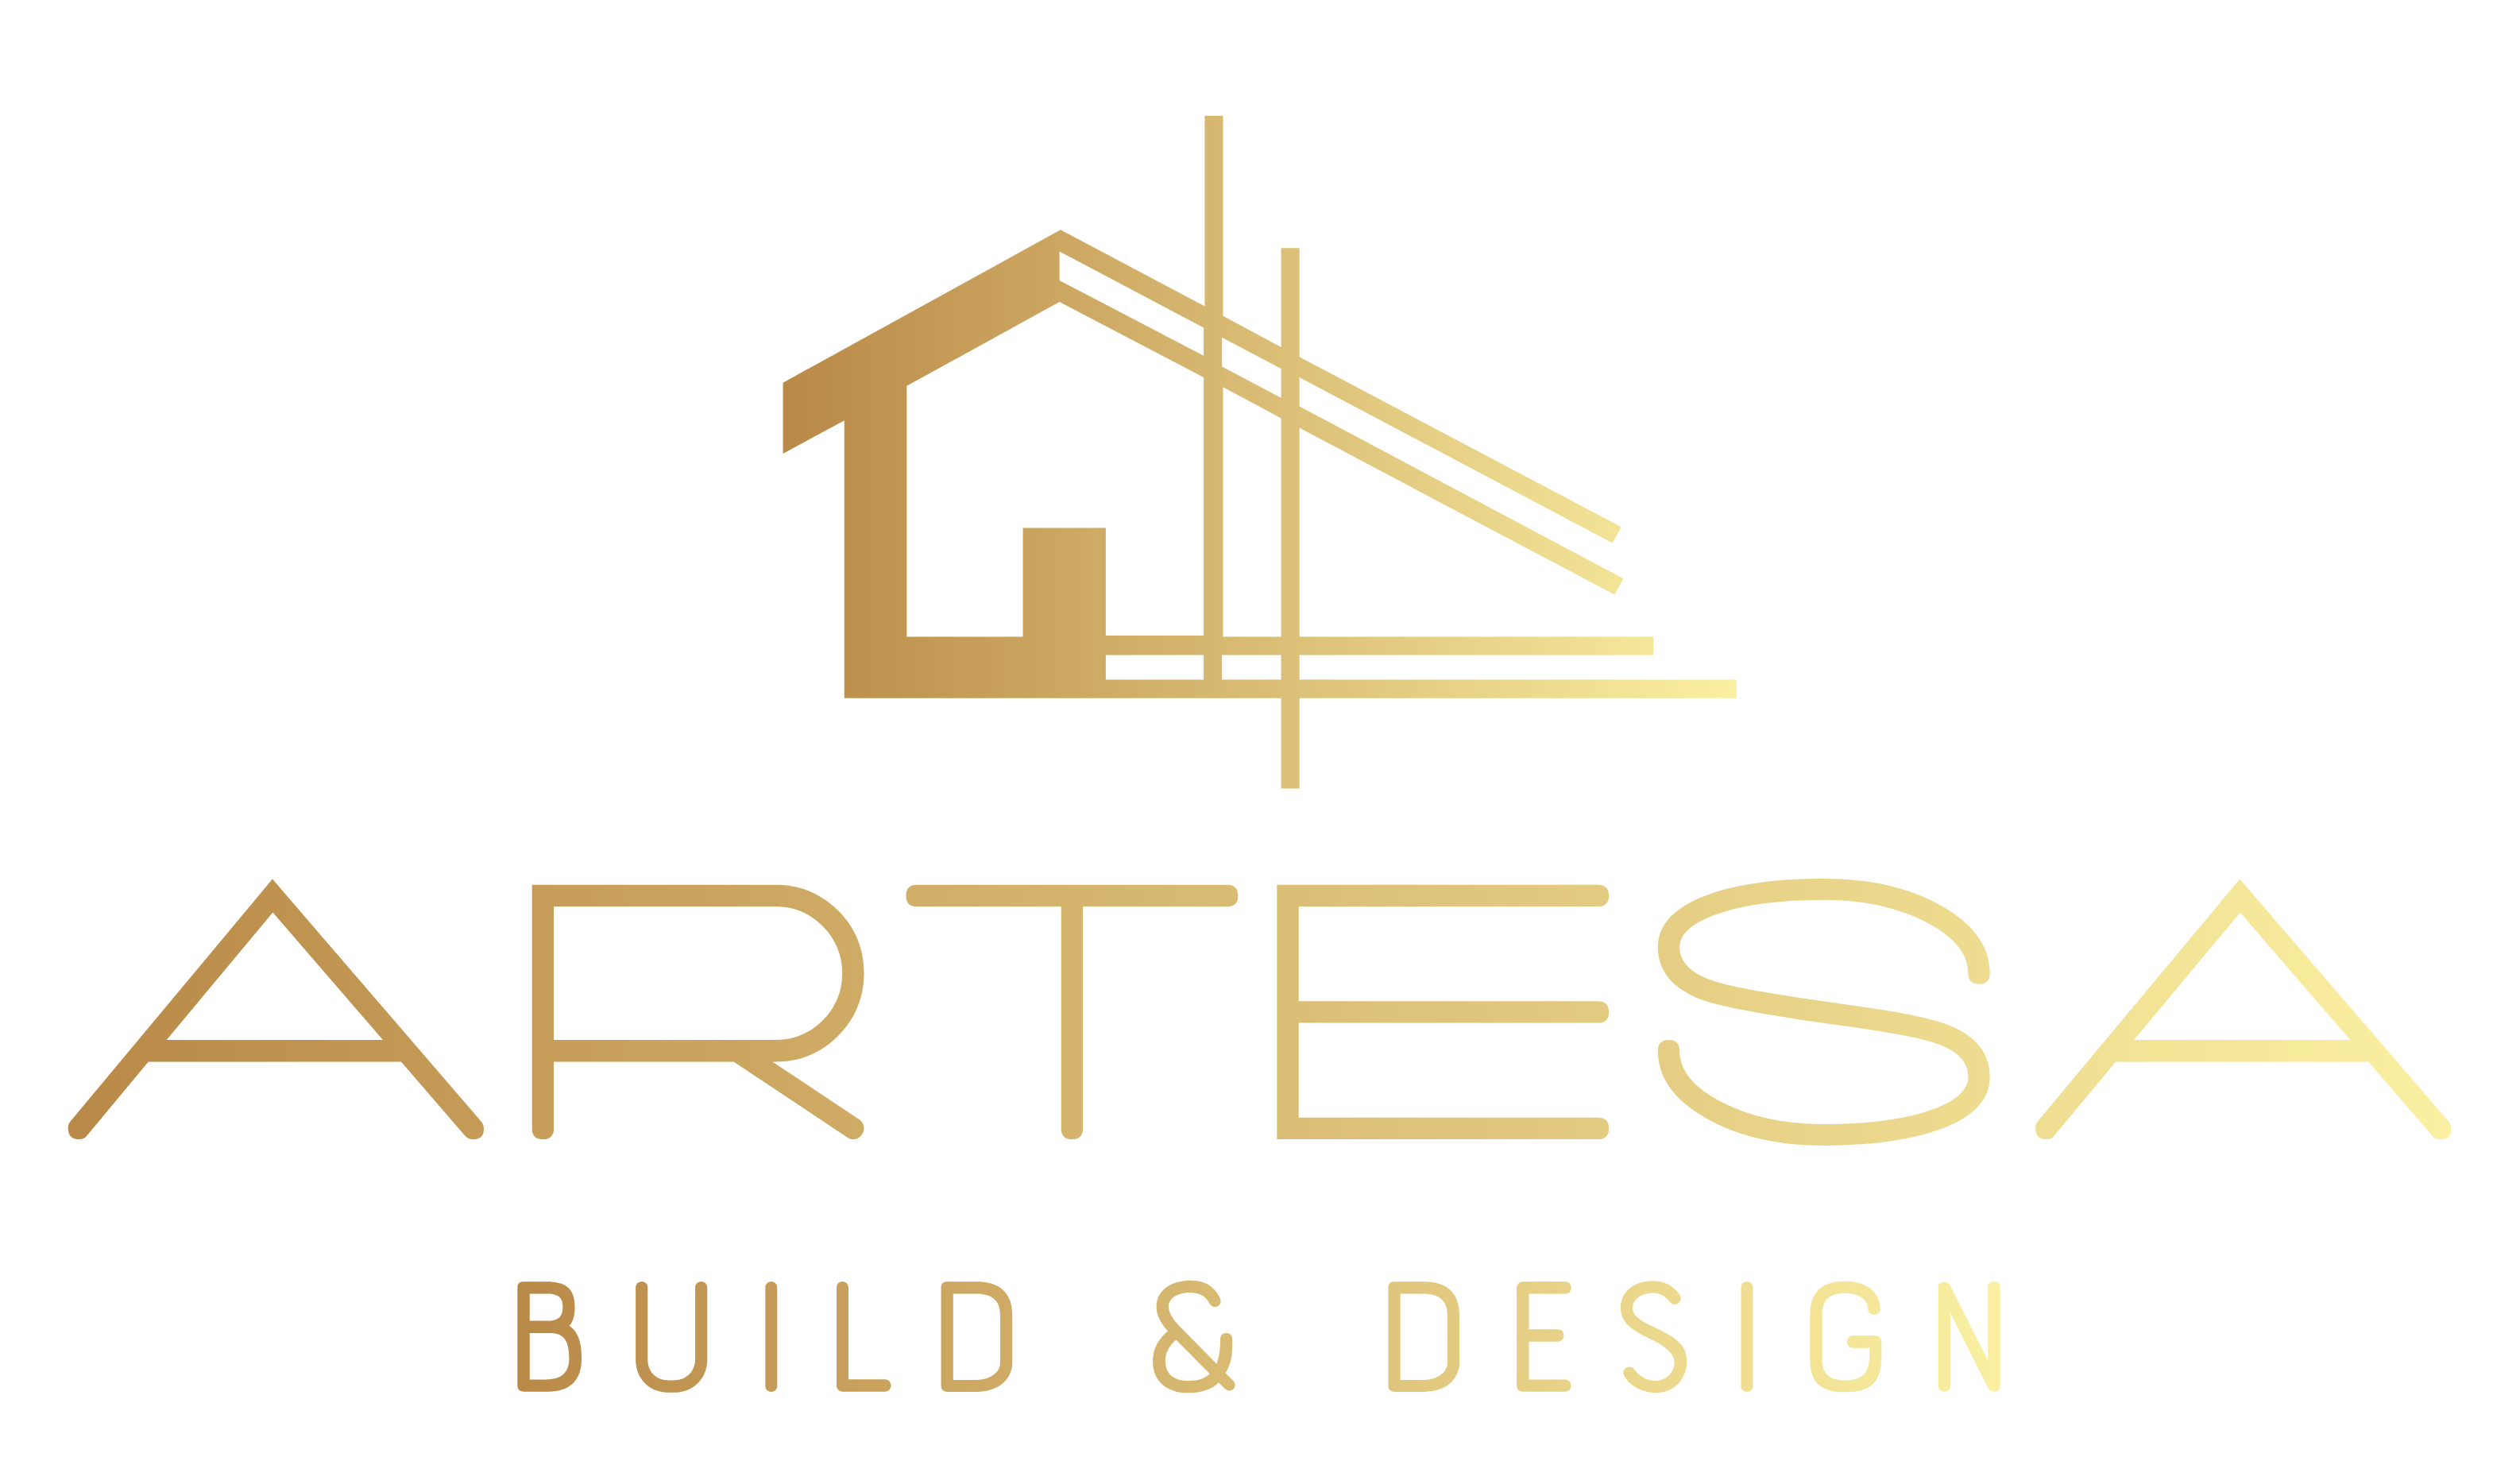 Construction and Remodeling Services | Artesa - Build & Design